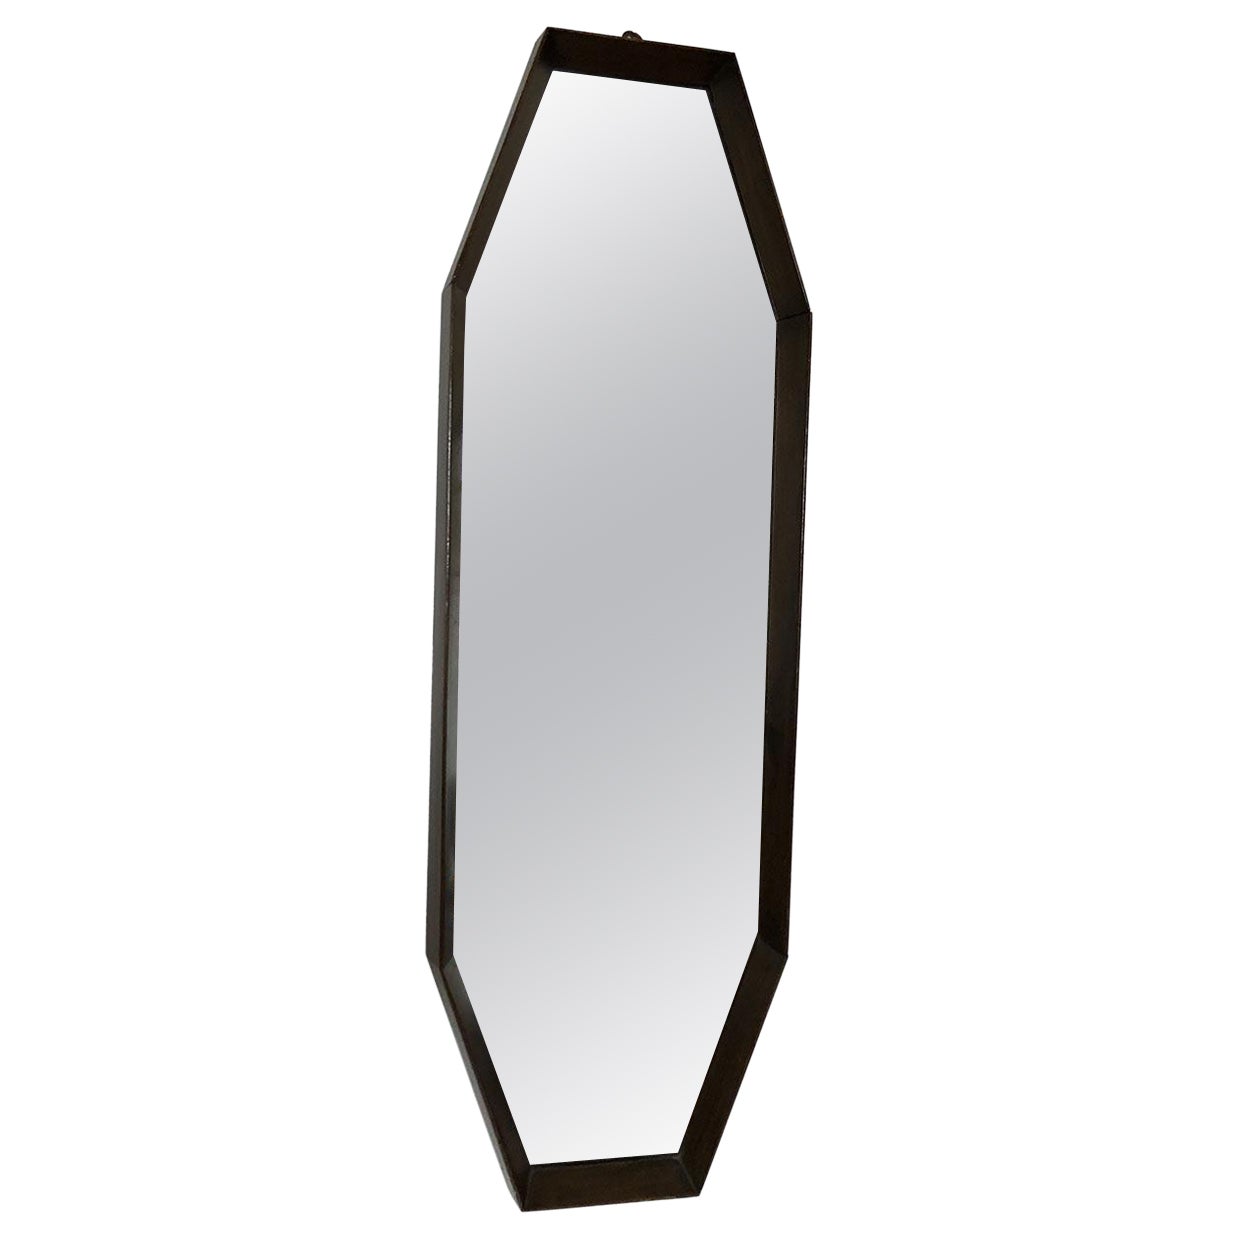 Teak octagonal mirror For Sale